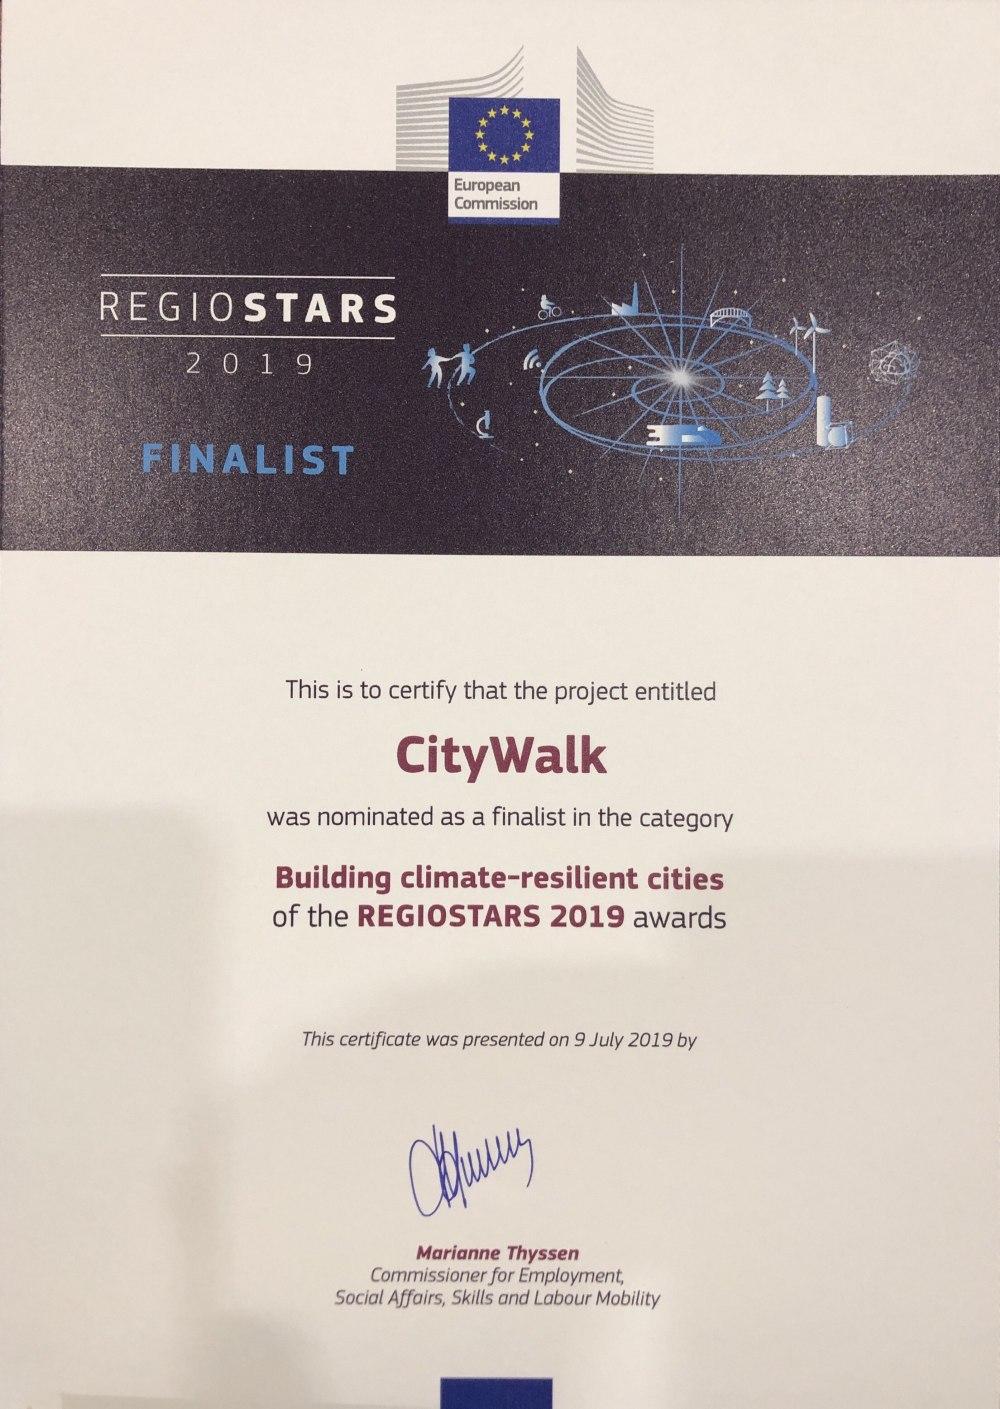 CityWalk Regio Stars Wawrds 2019